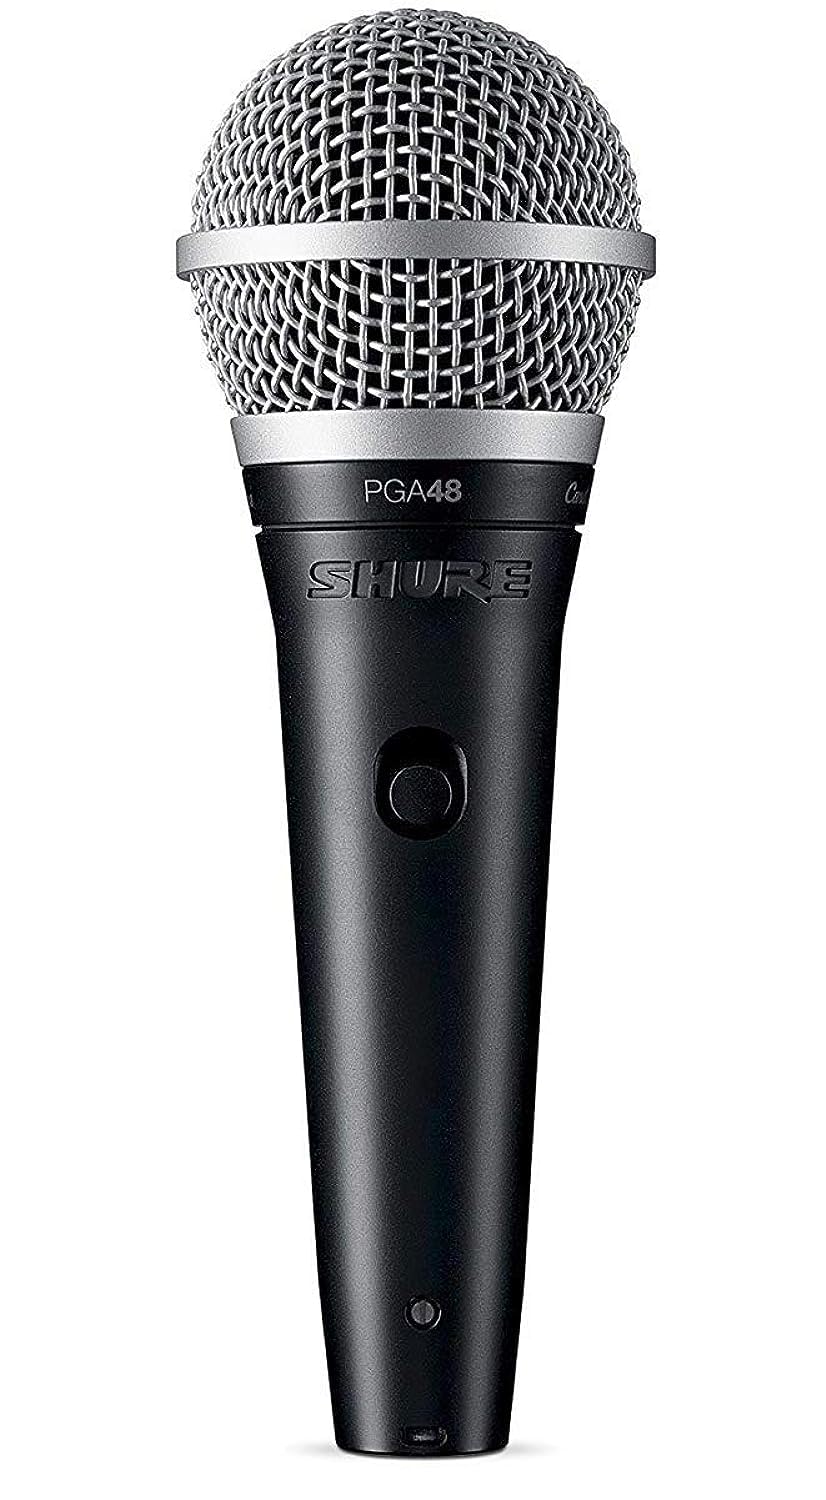 Achat Shure PGA48 Microphone Dynamique - Microphone à M